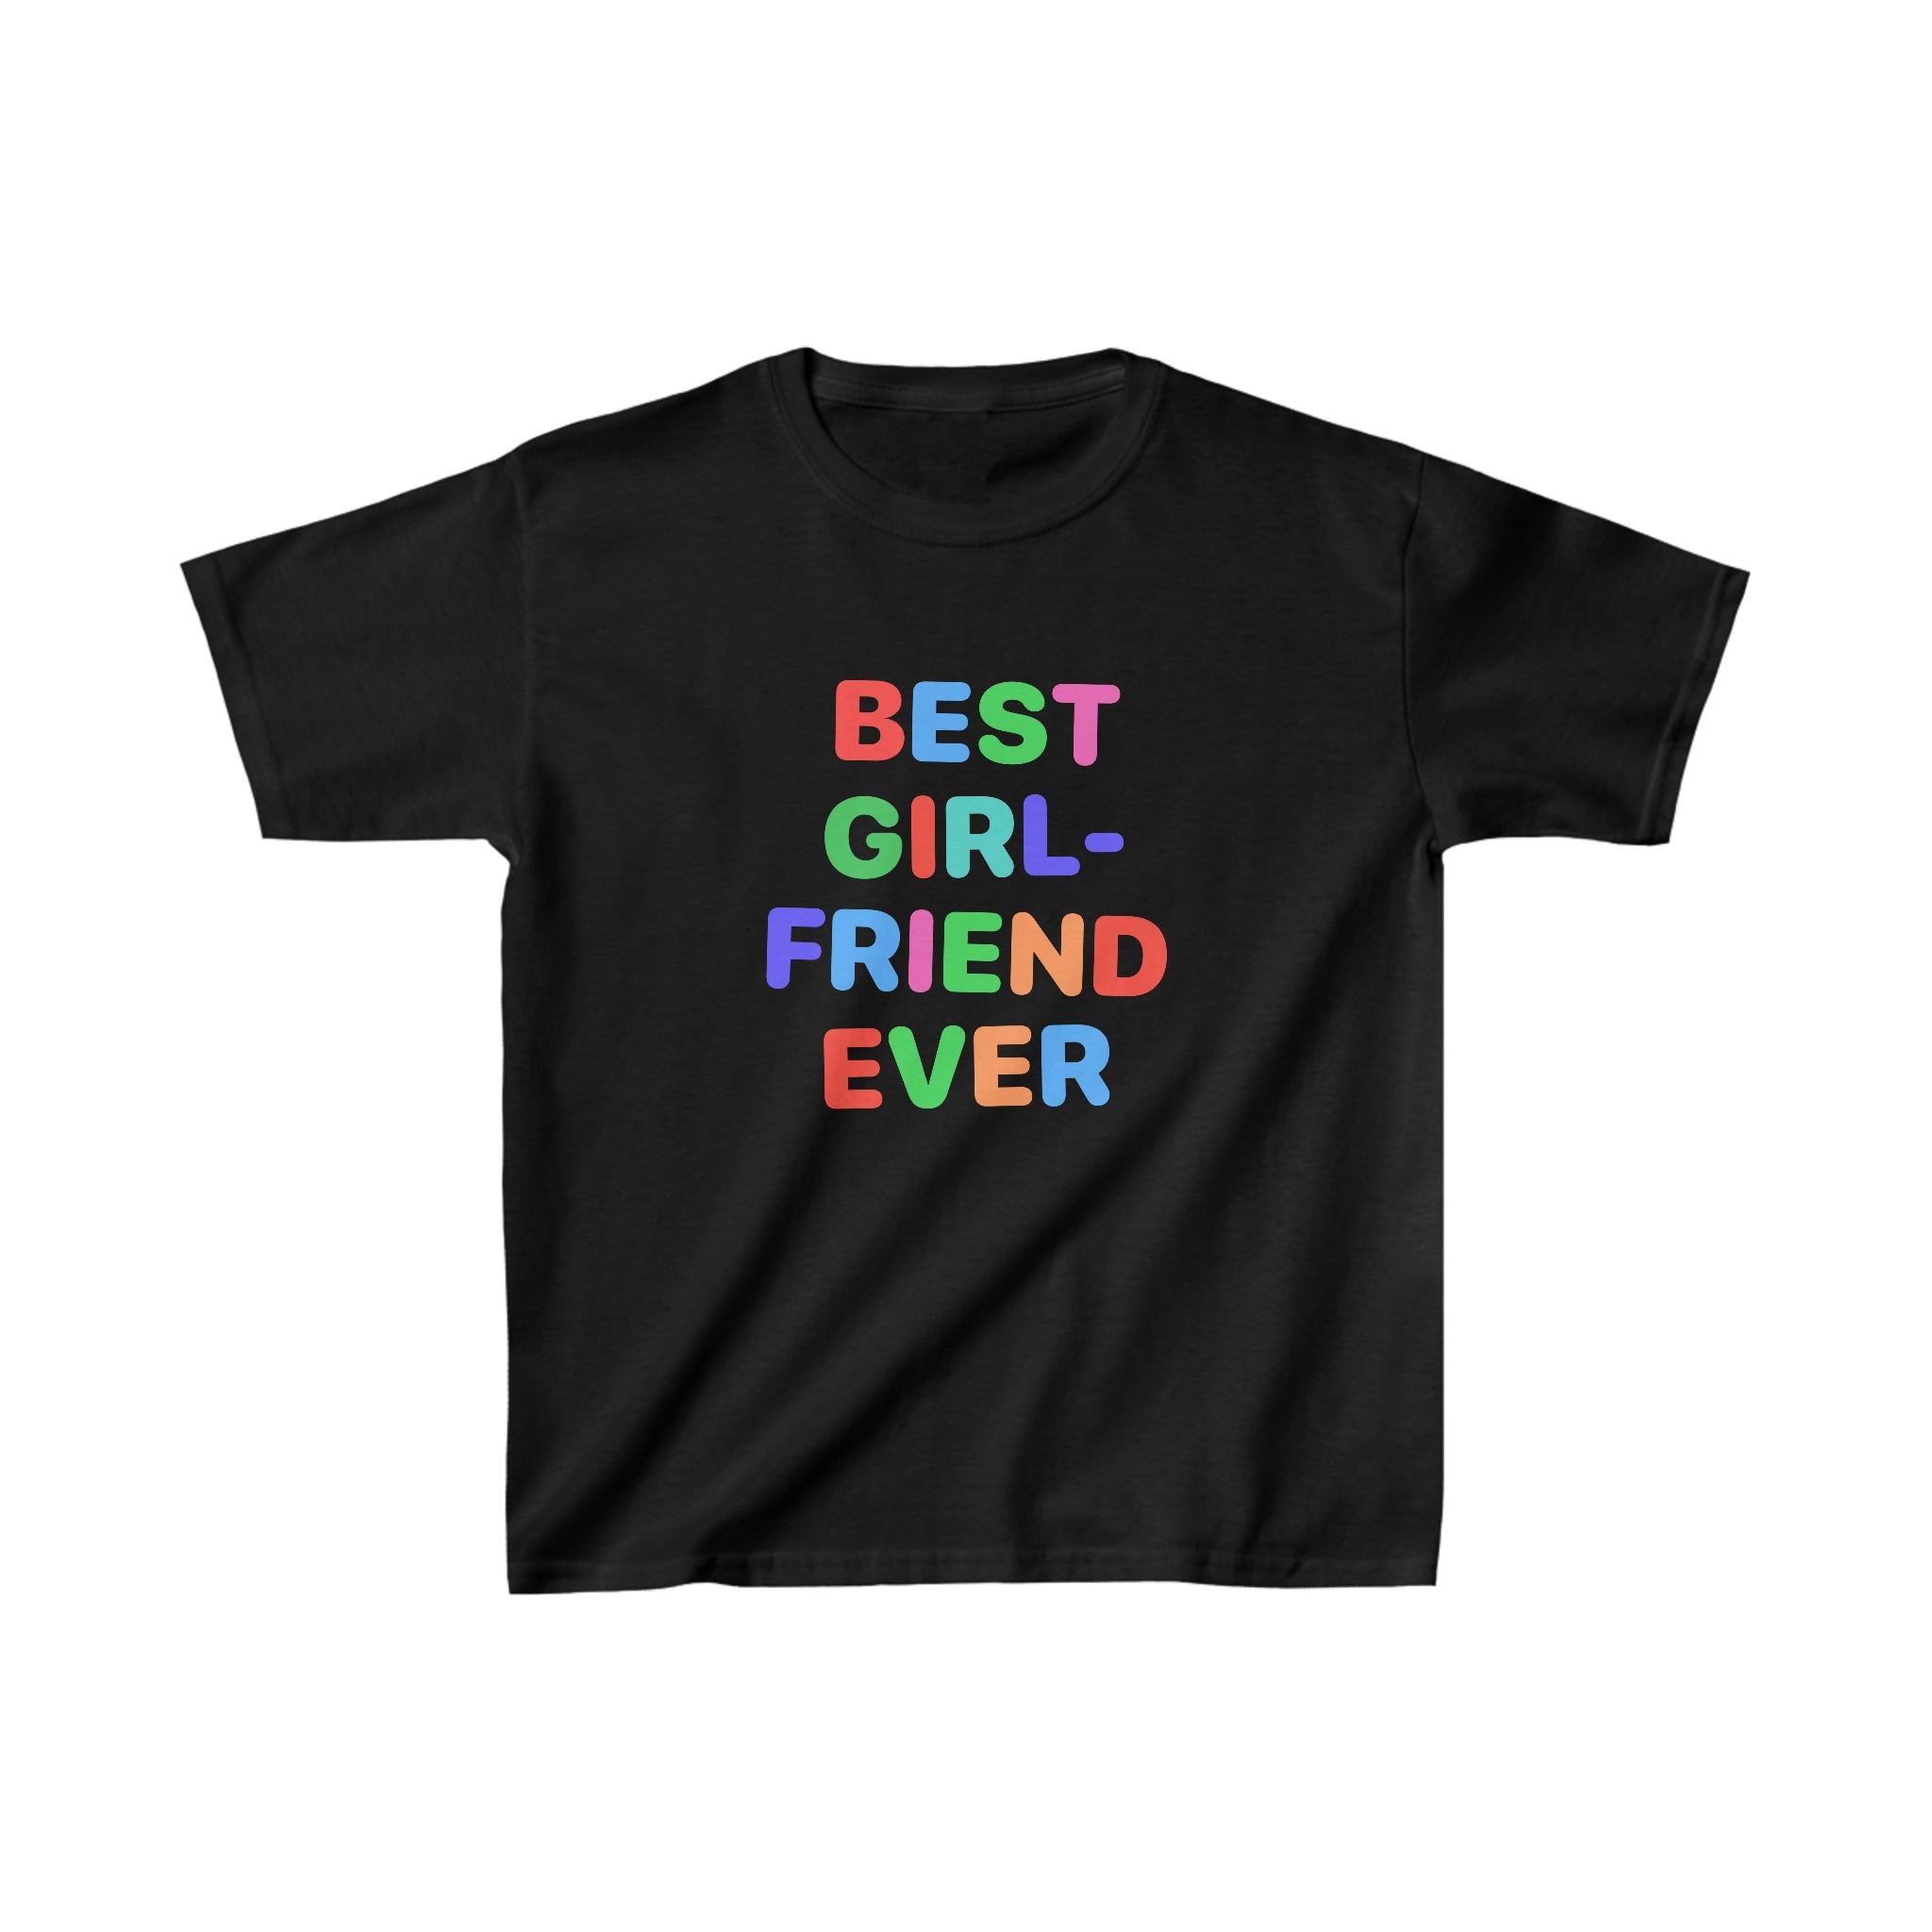 'Best Girlfriend Ever' baby tee - In Print We Trust